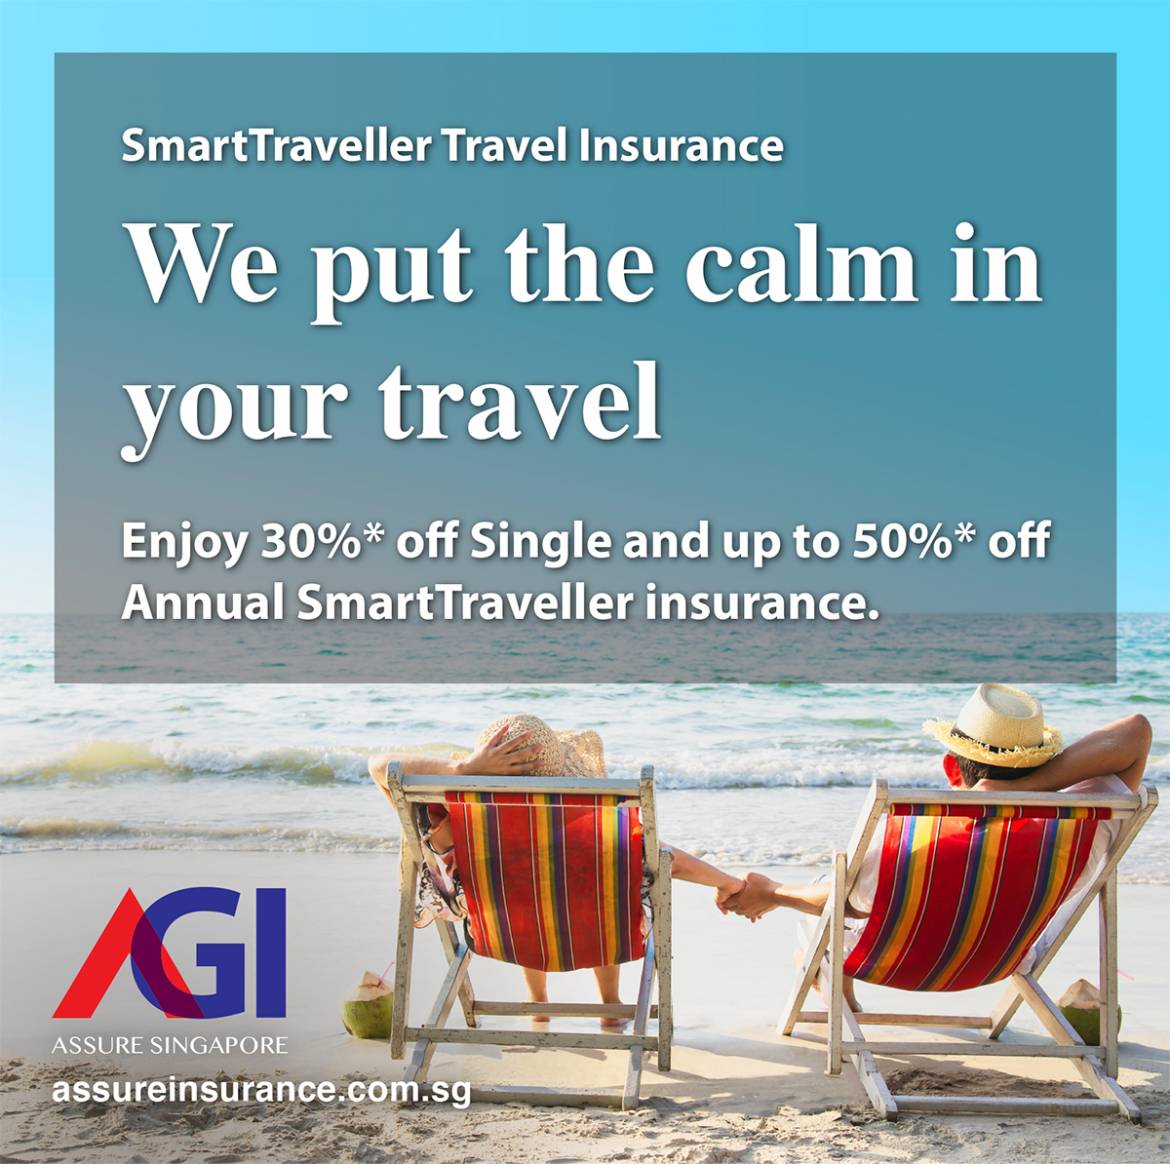 axa travel insurance policy booklet